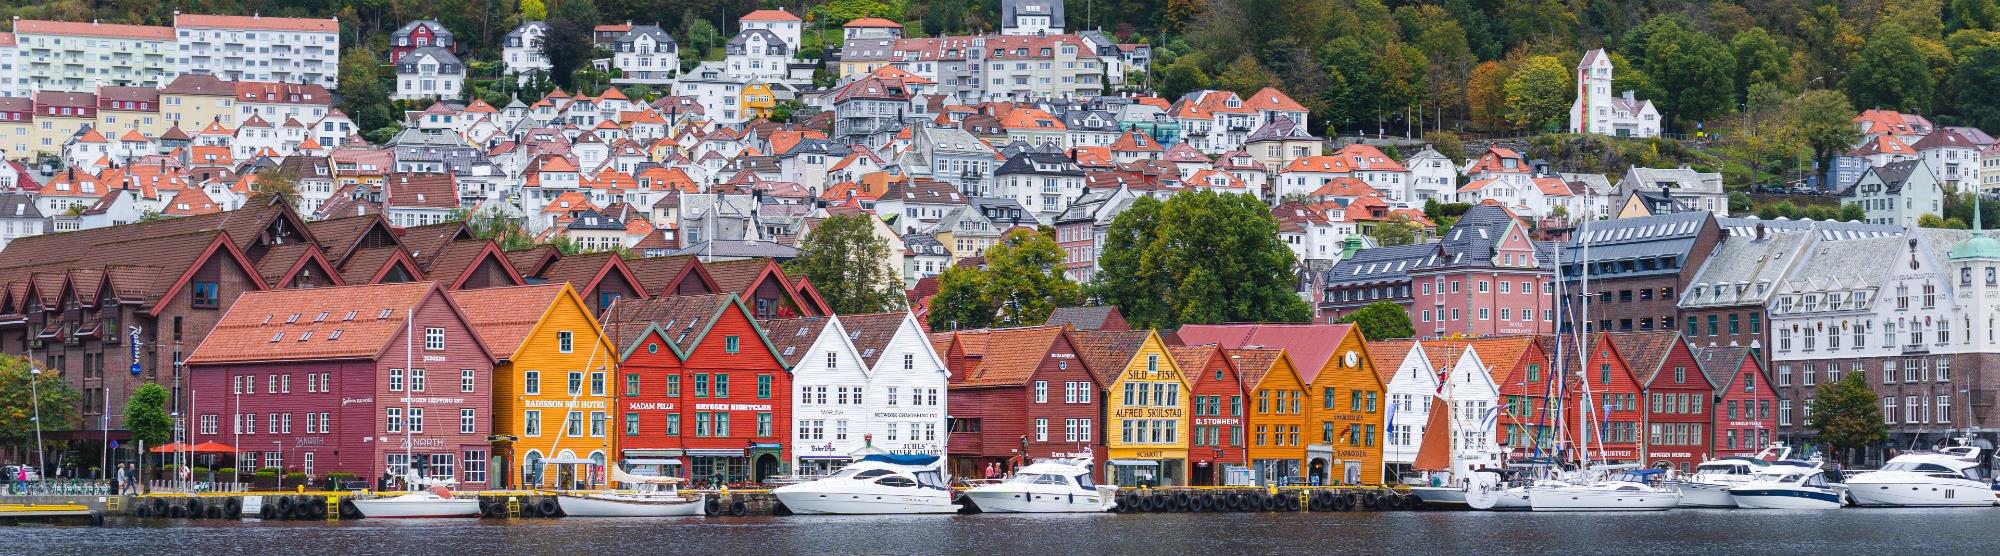 Visit Bergen - Official Bergen (Norway) Tourist Information Site